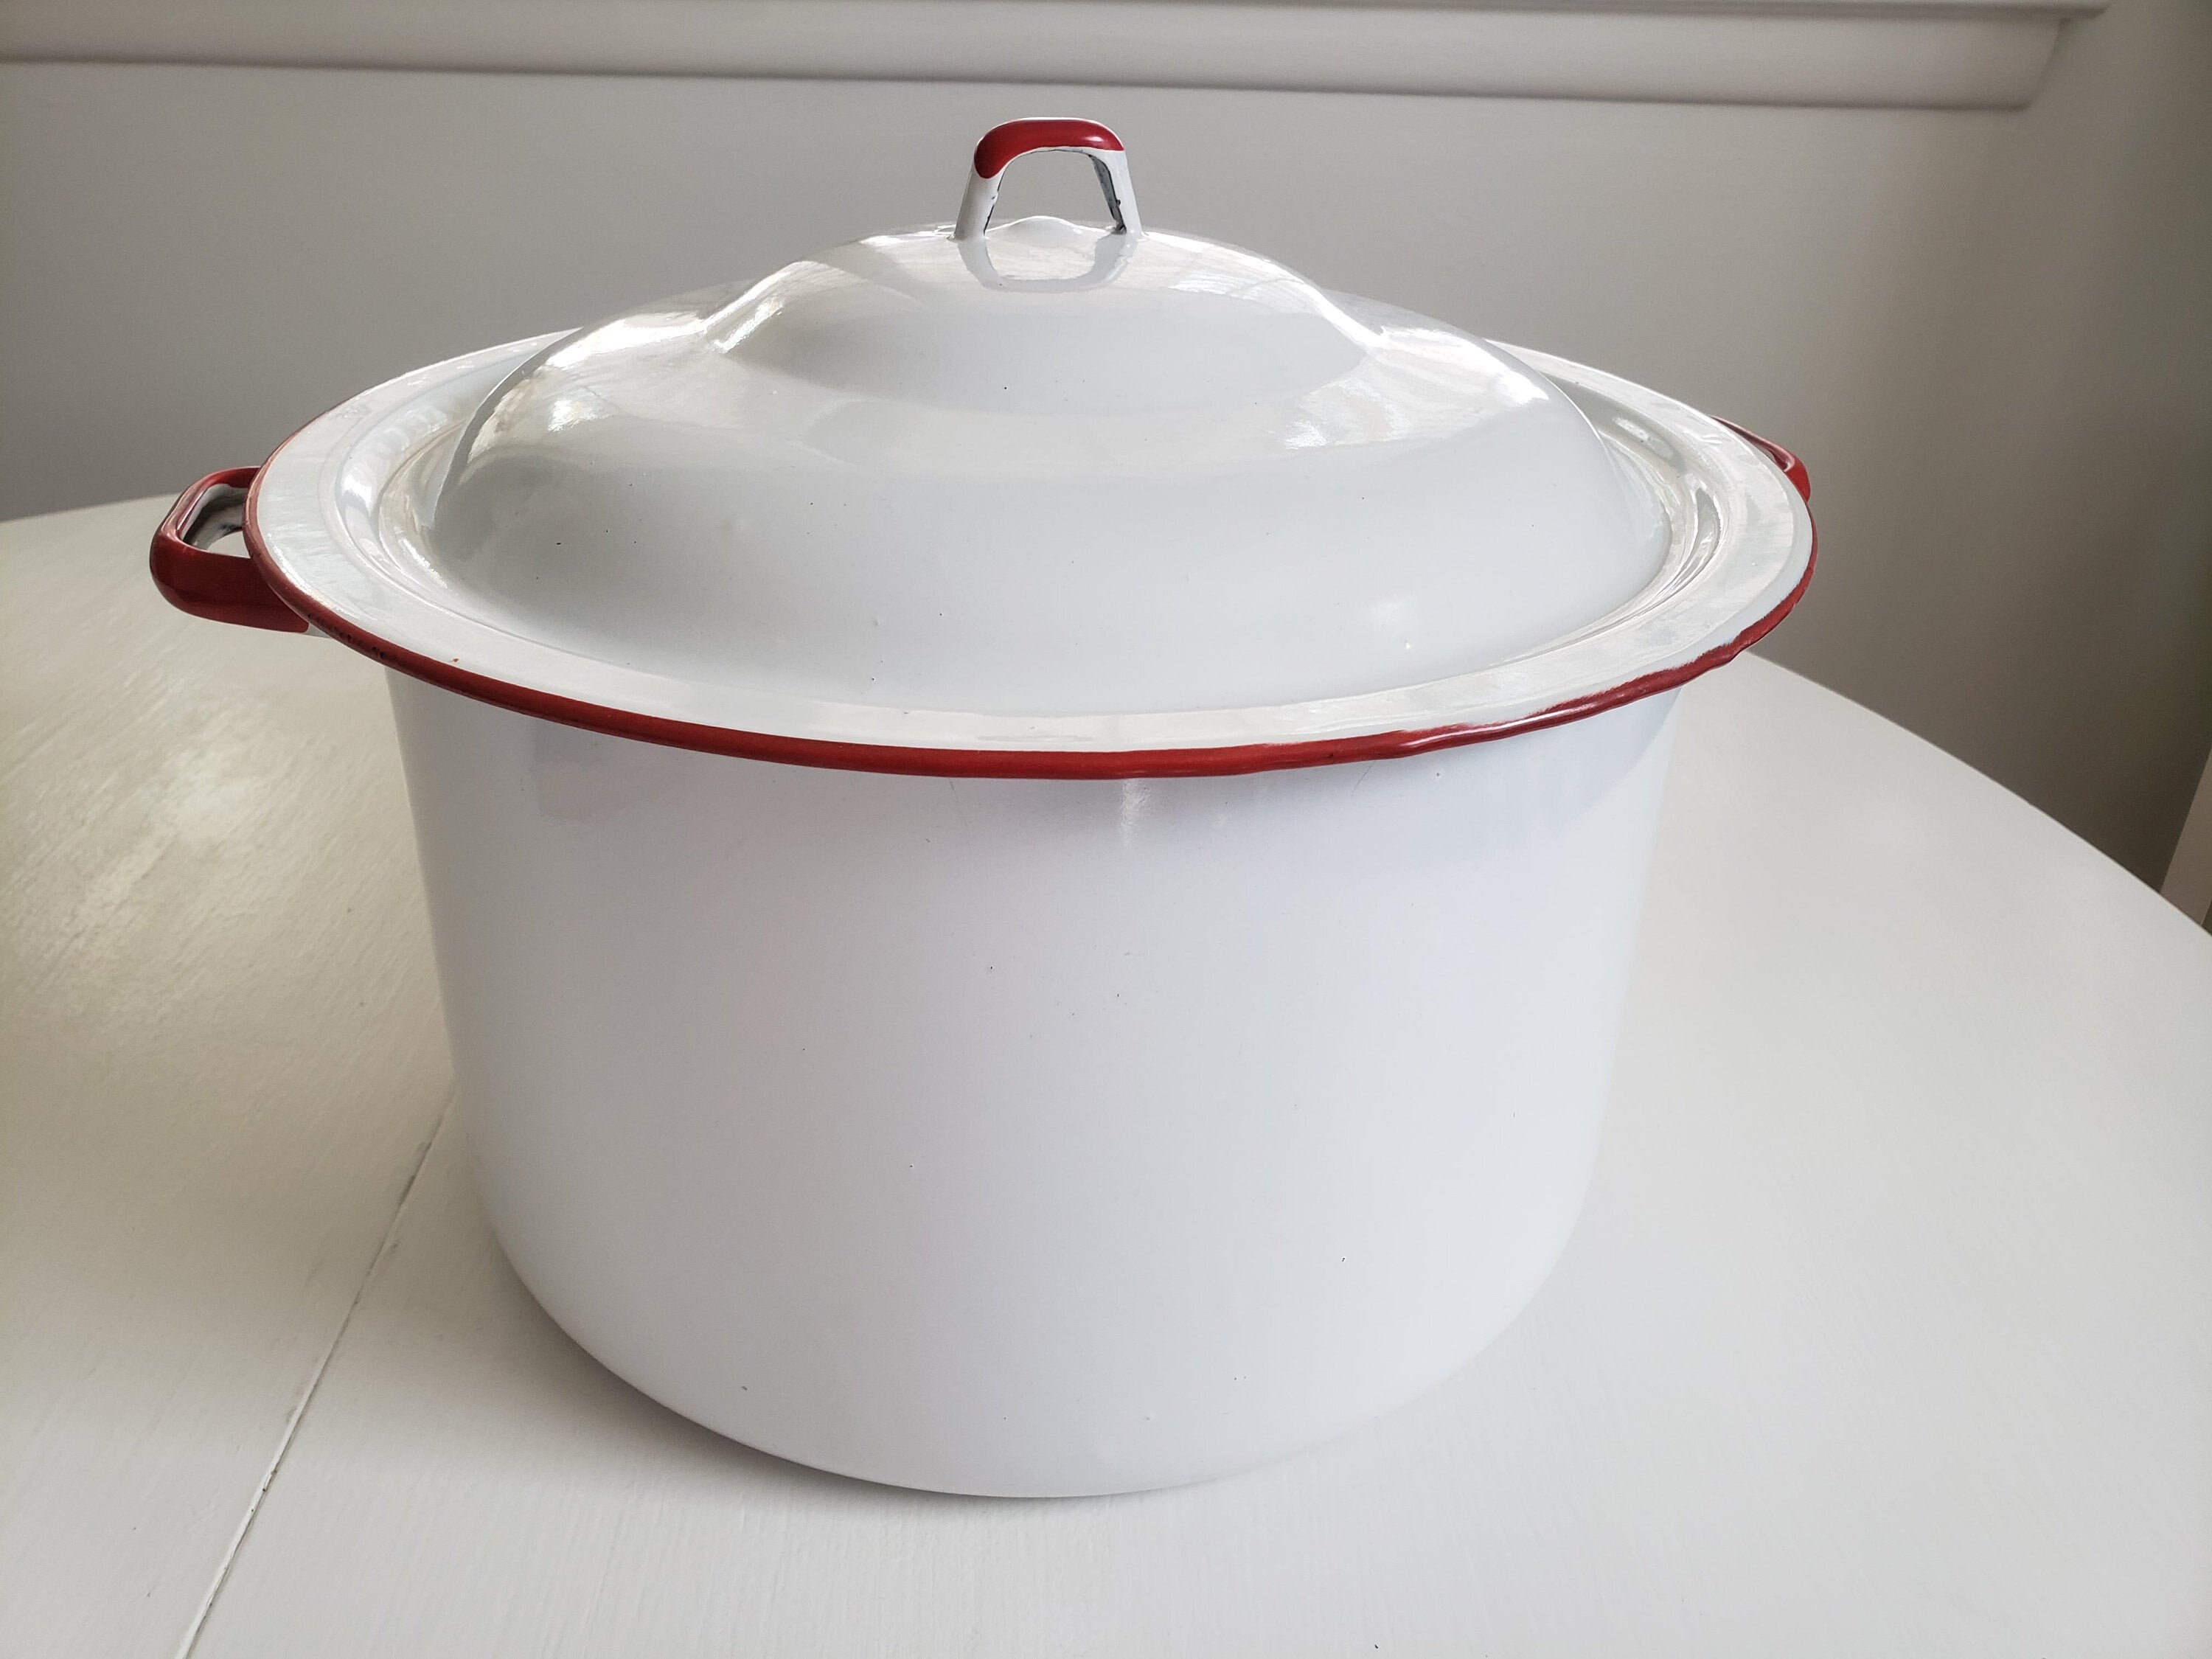 Vintage White & Red Large Enamel Pot With Lid - Retro Farmhouse Kitchen Decor Soup Stock Seafood Crab Bake Rustic Enamelware